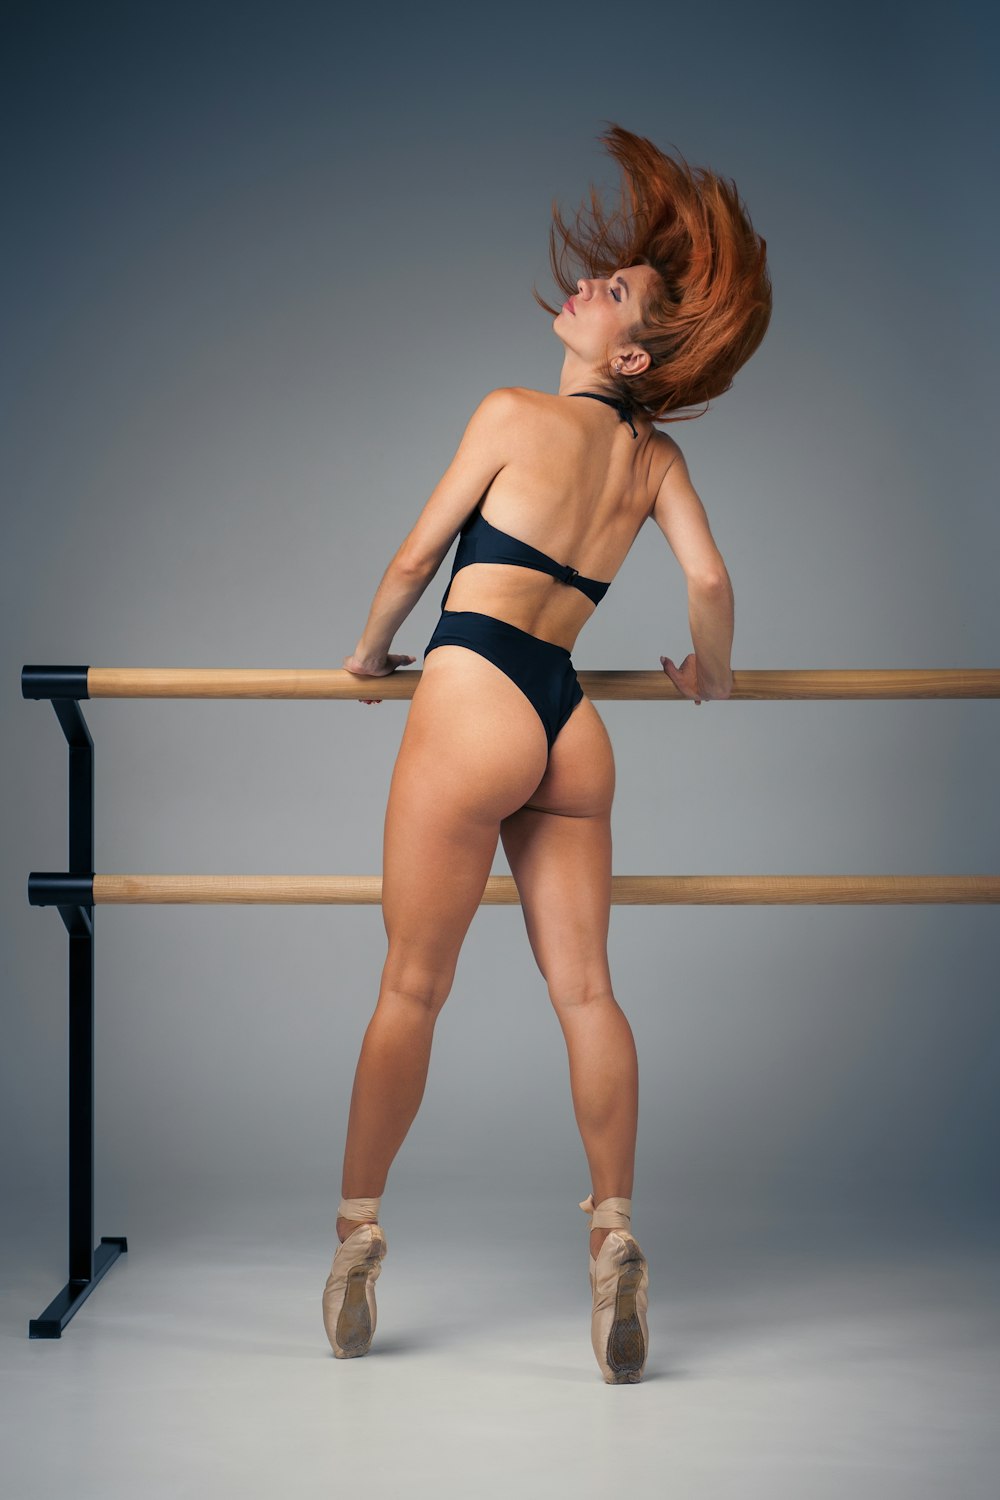 a woman in a bikini leaning on a pole